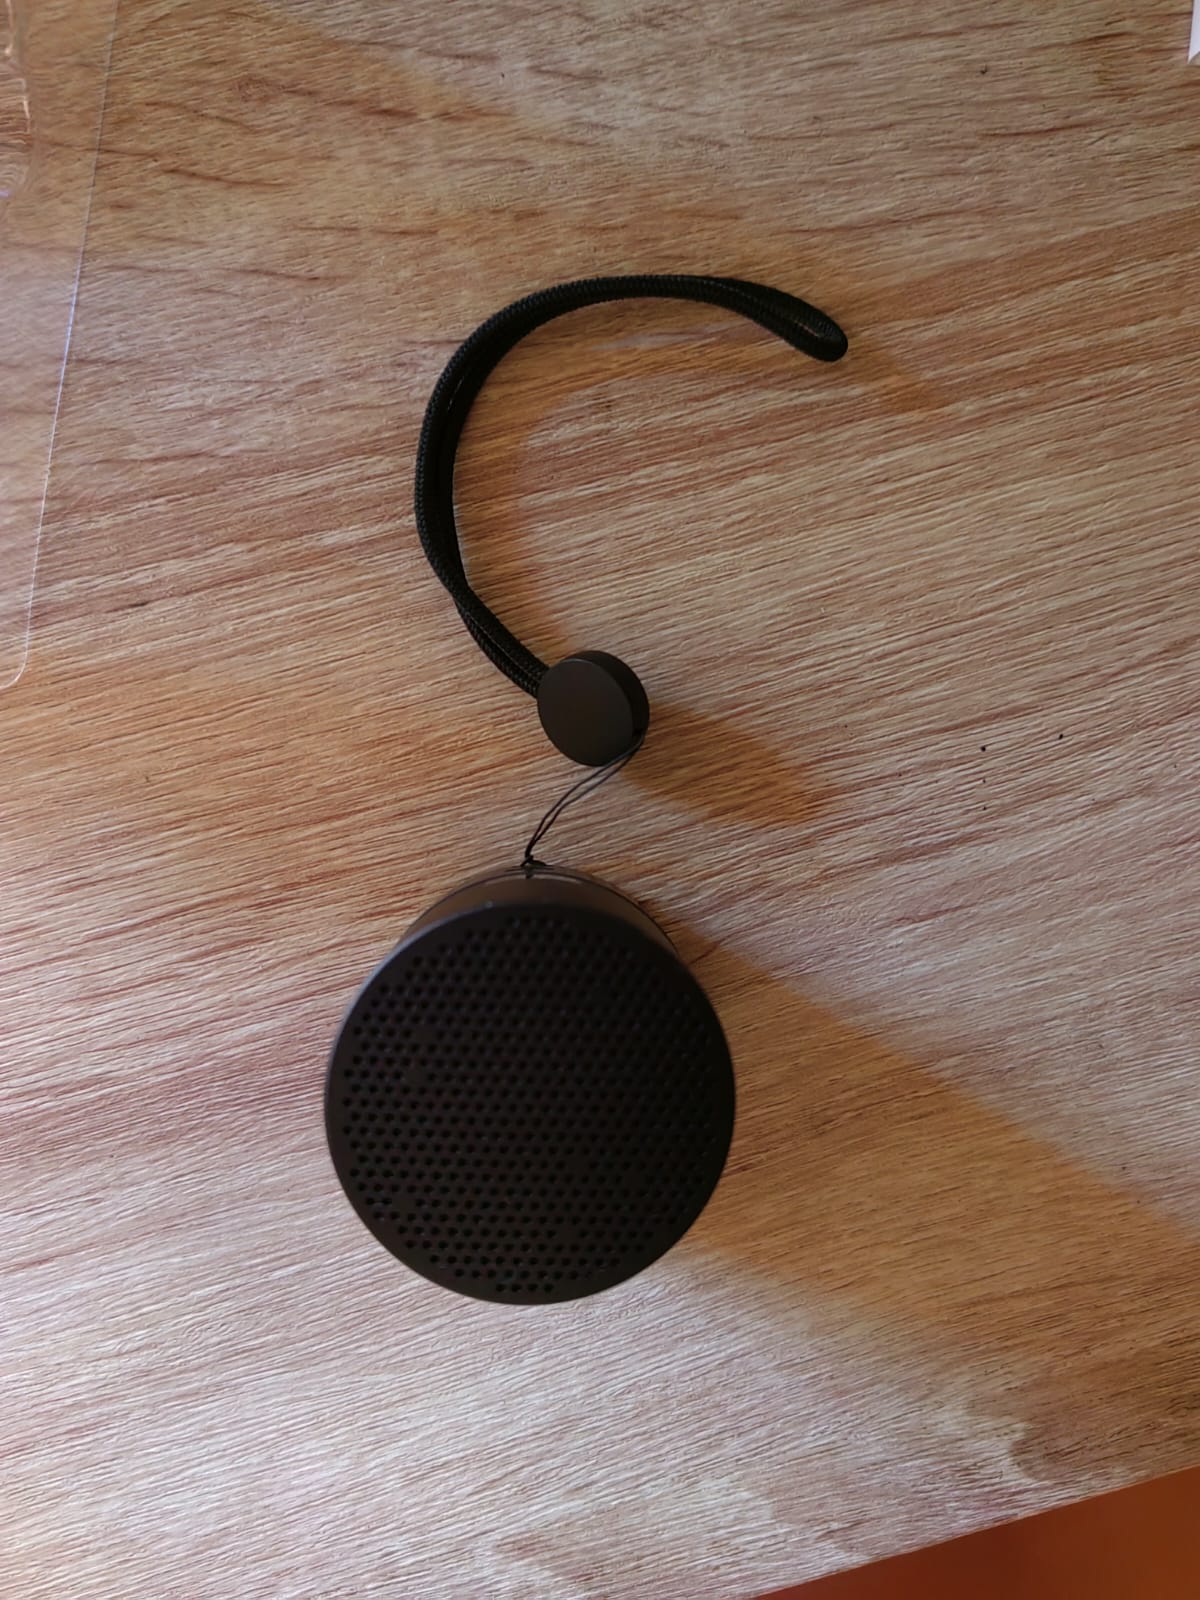 Huawai mini Bluetooth speaker